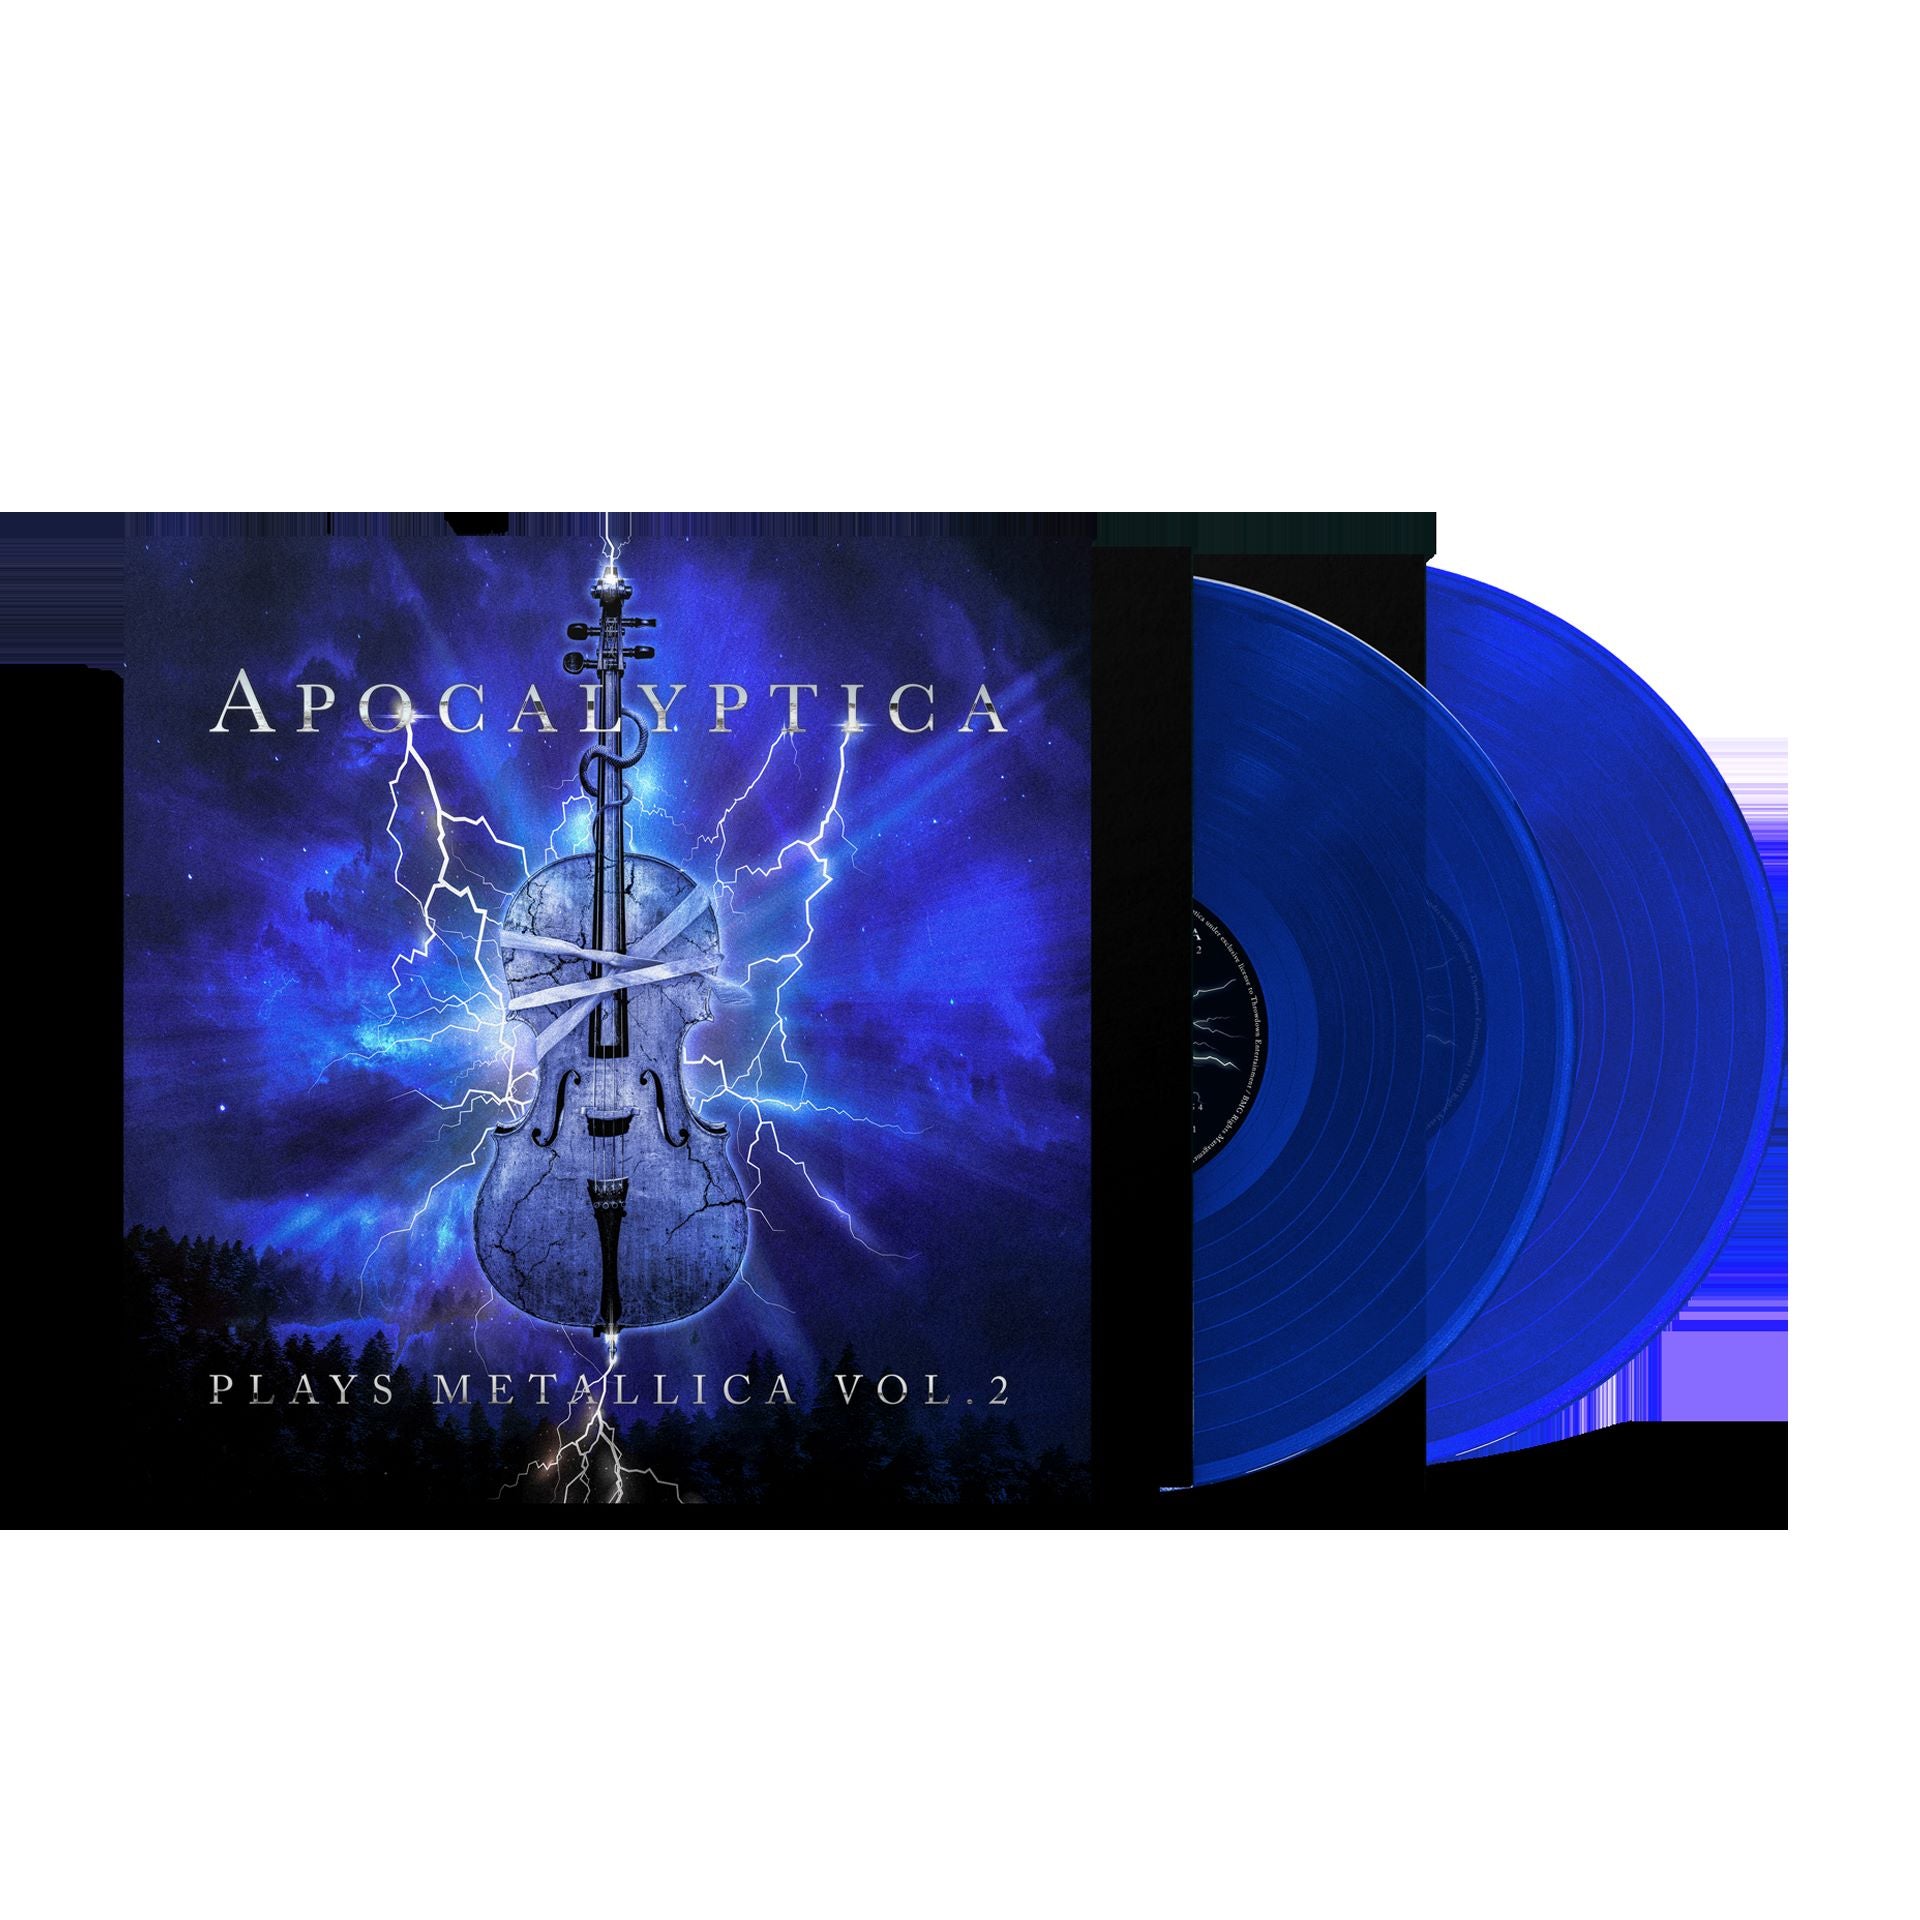 Apocalyptica "Plays Metallica, Vol 2" 2x12" Transparent Blue Vinyl - PRE-ORDER